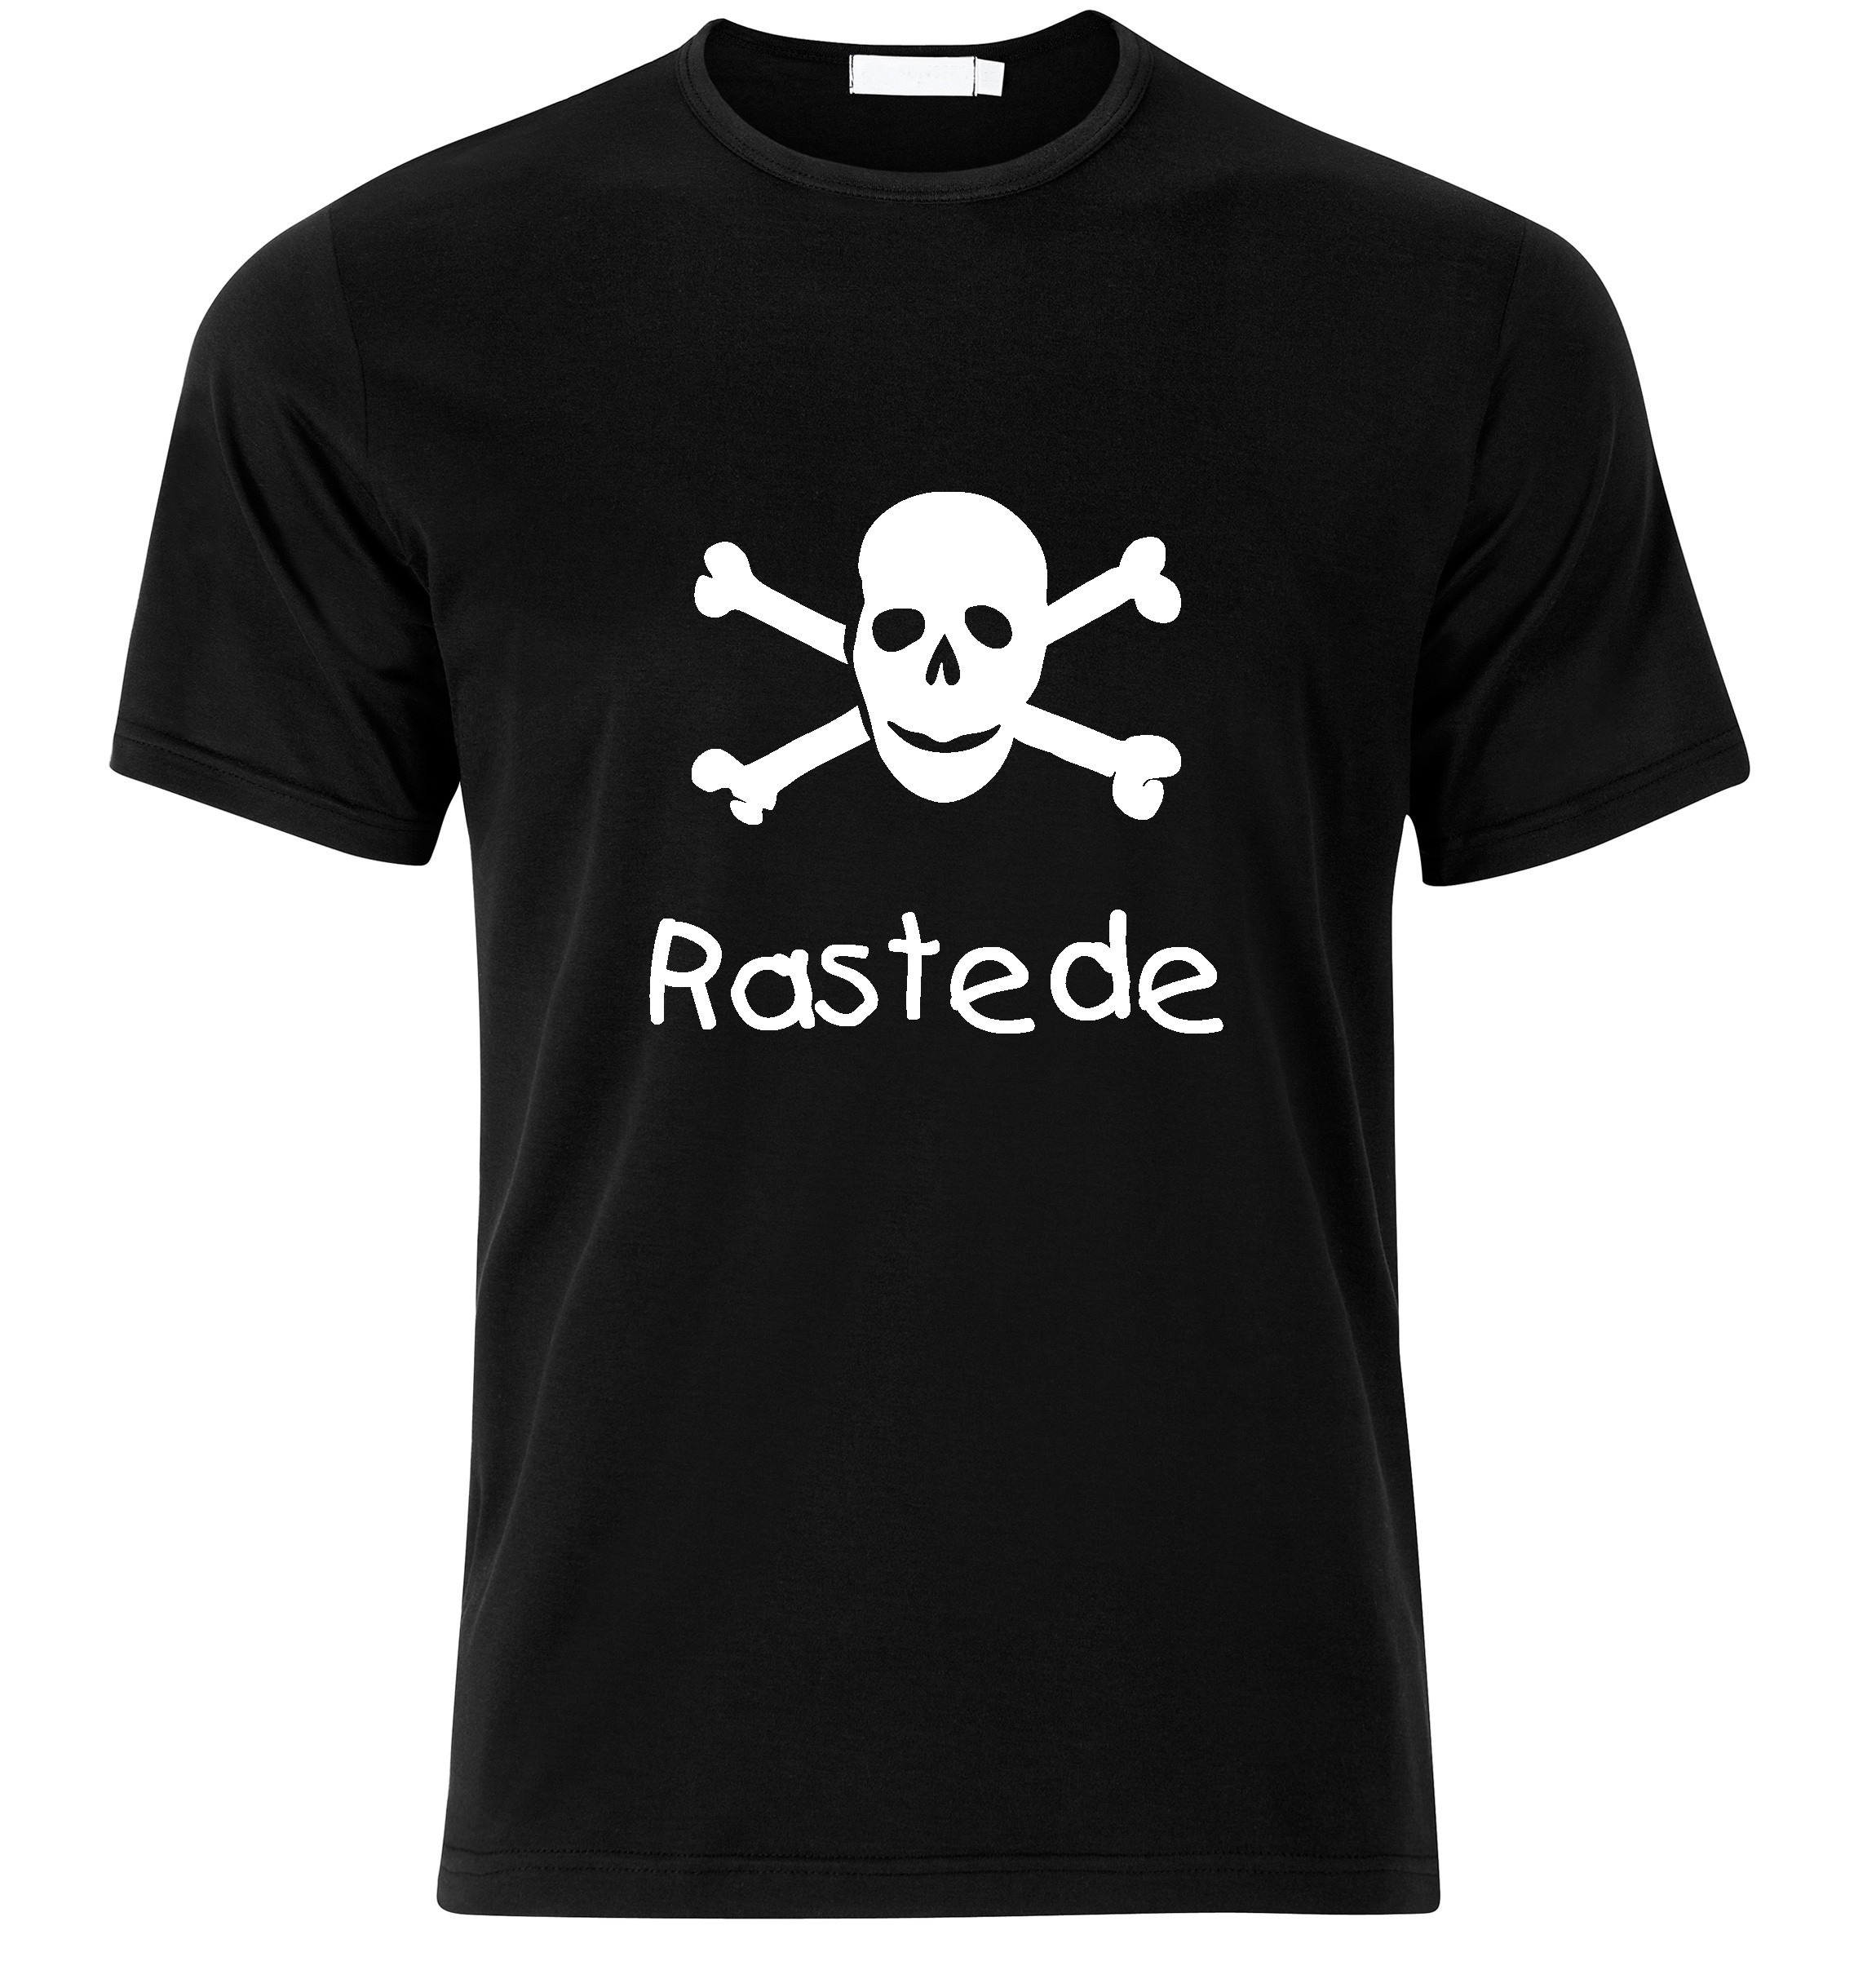 T-Shirt Rastede Jolly Roger, Totenkopf